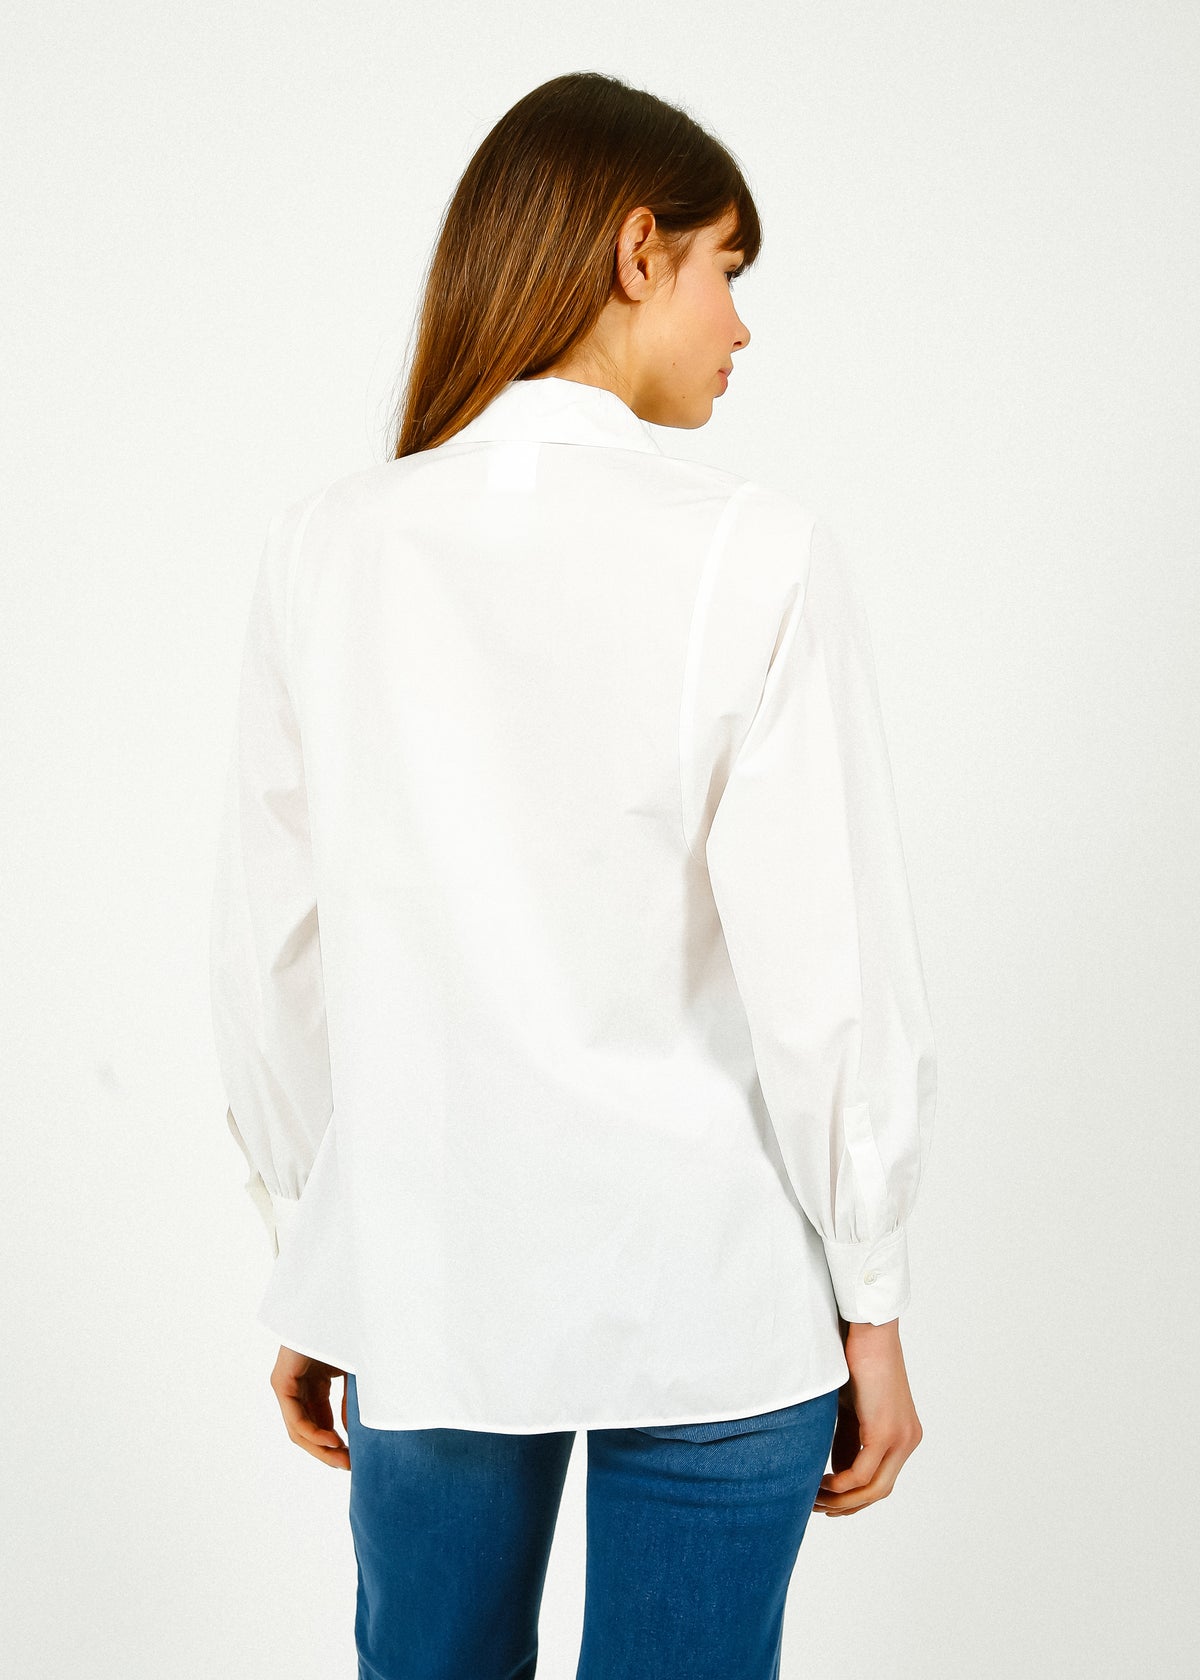 MM Fufy Shirt in White